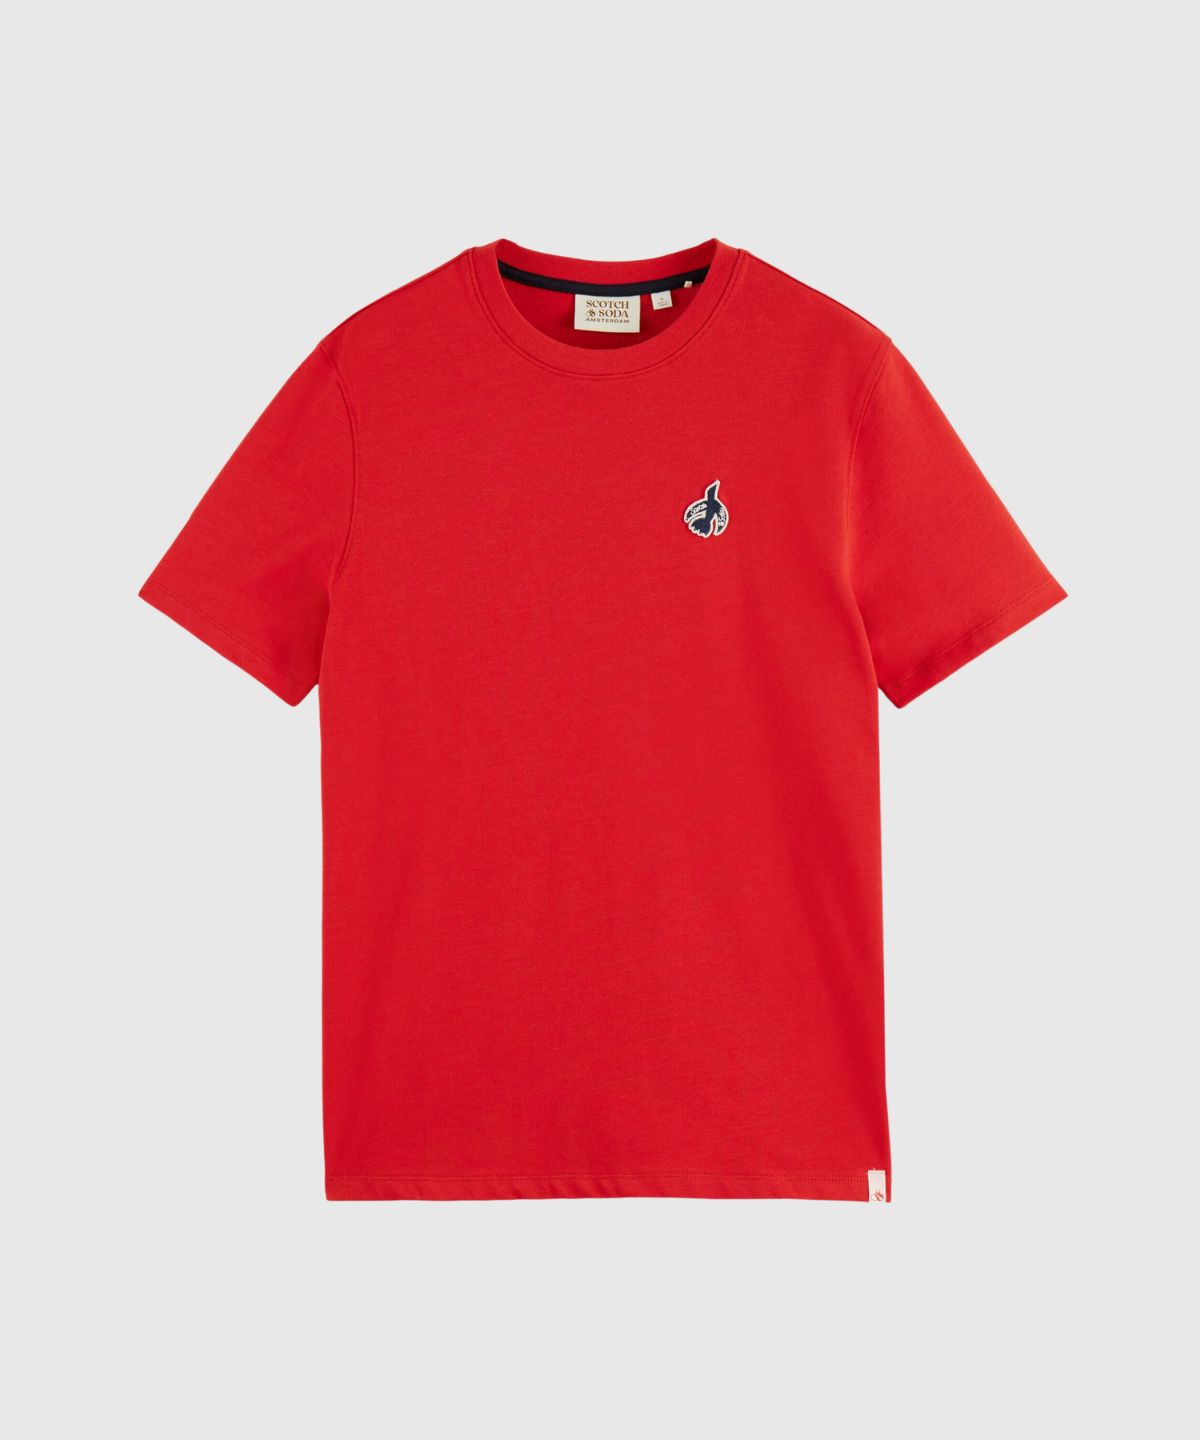 The free spirit peace bird Organic Cotton T-shirt